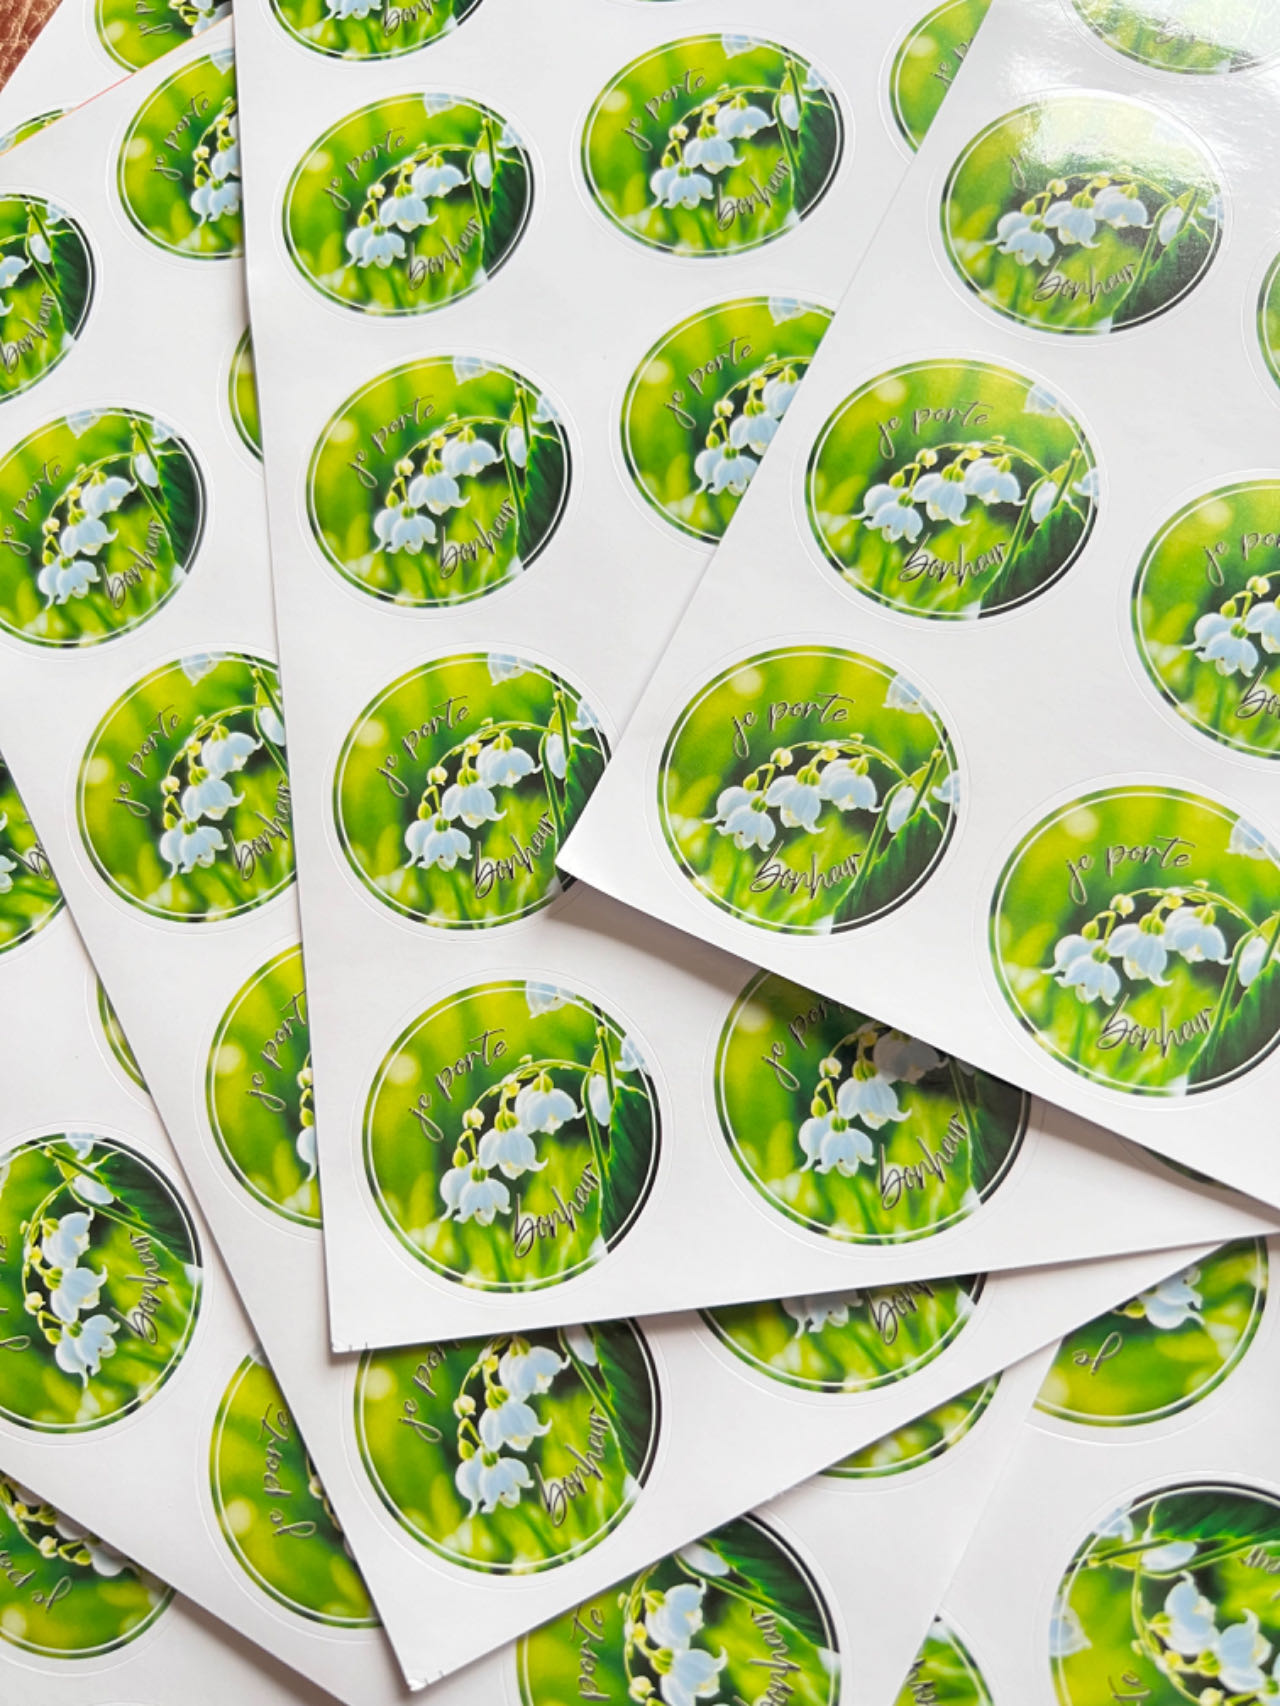 300 autocollants stickers pour muguet 1er Mai DMA1